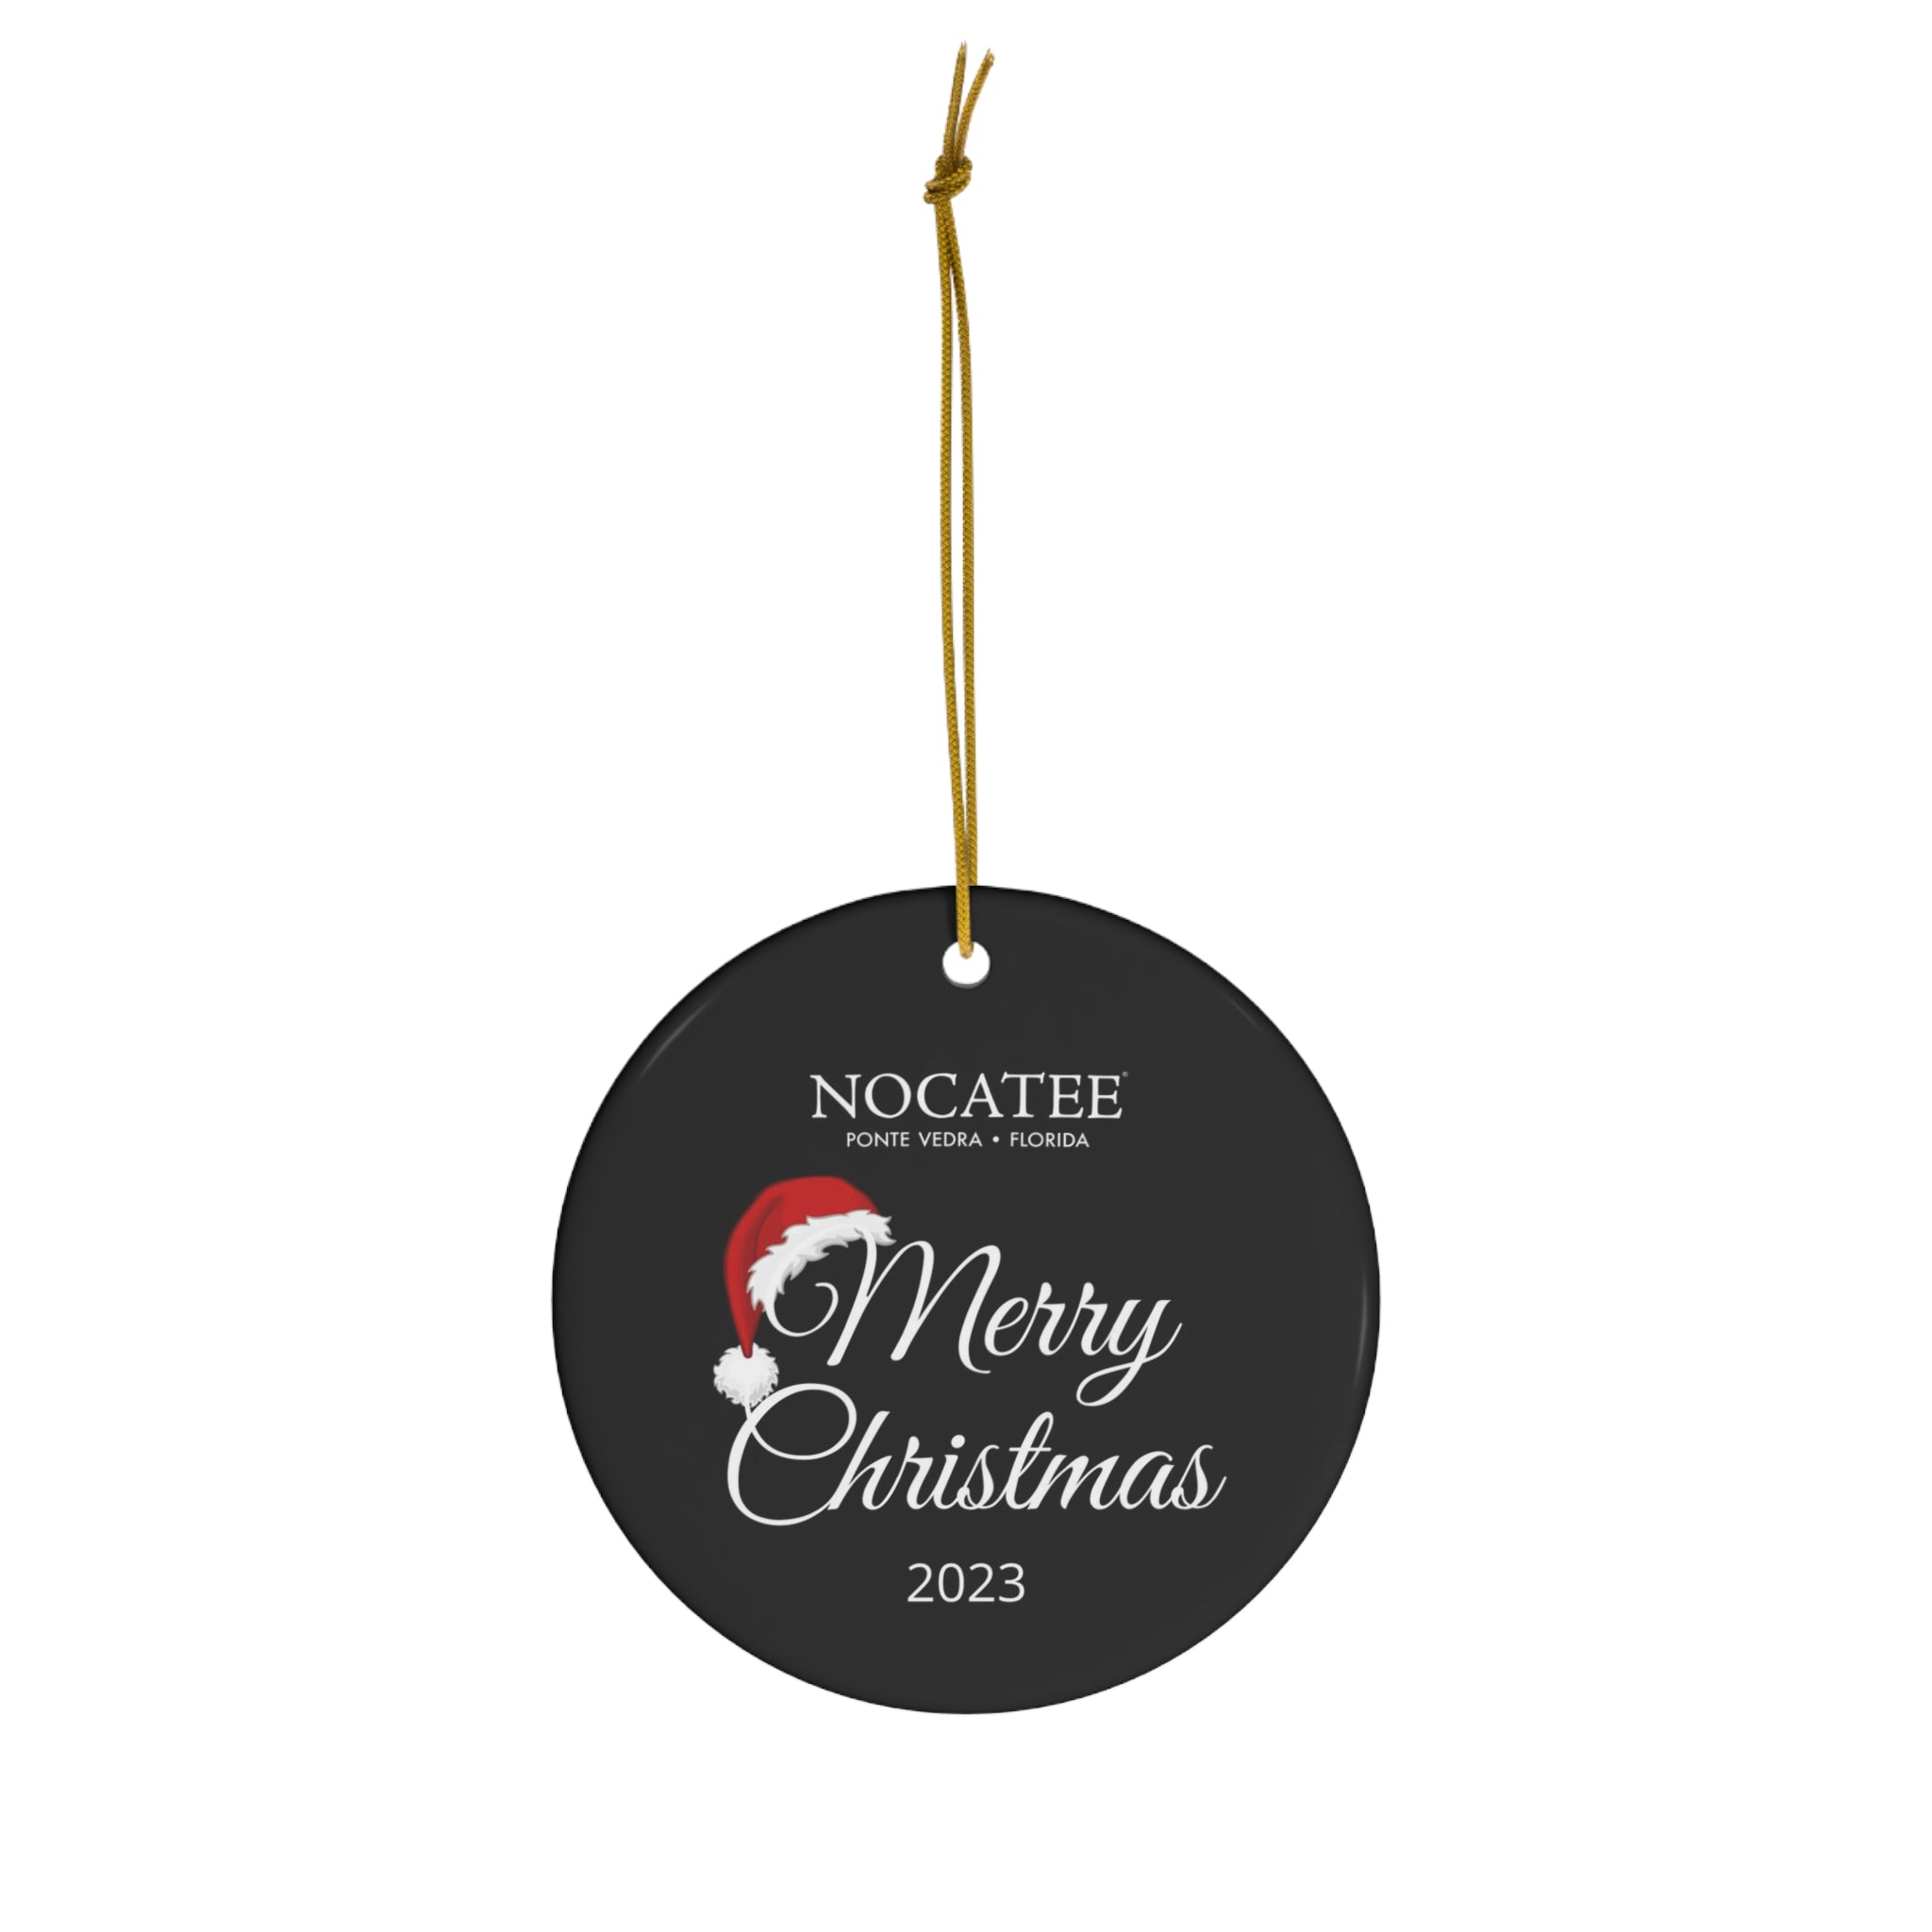 Nocatee Christmas Ornament 2023 - Black